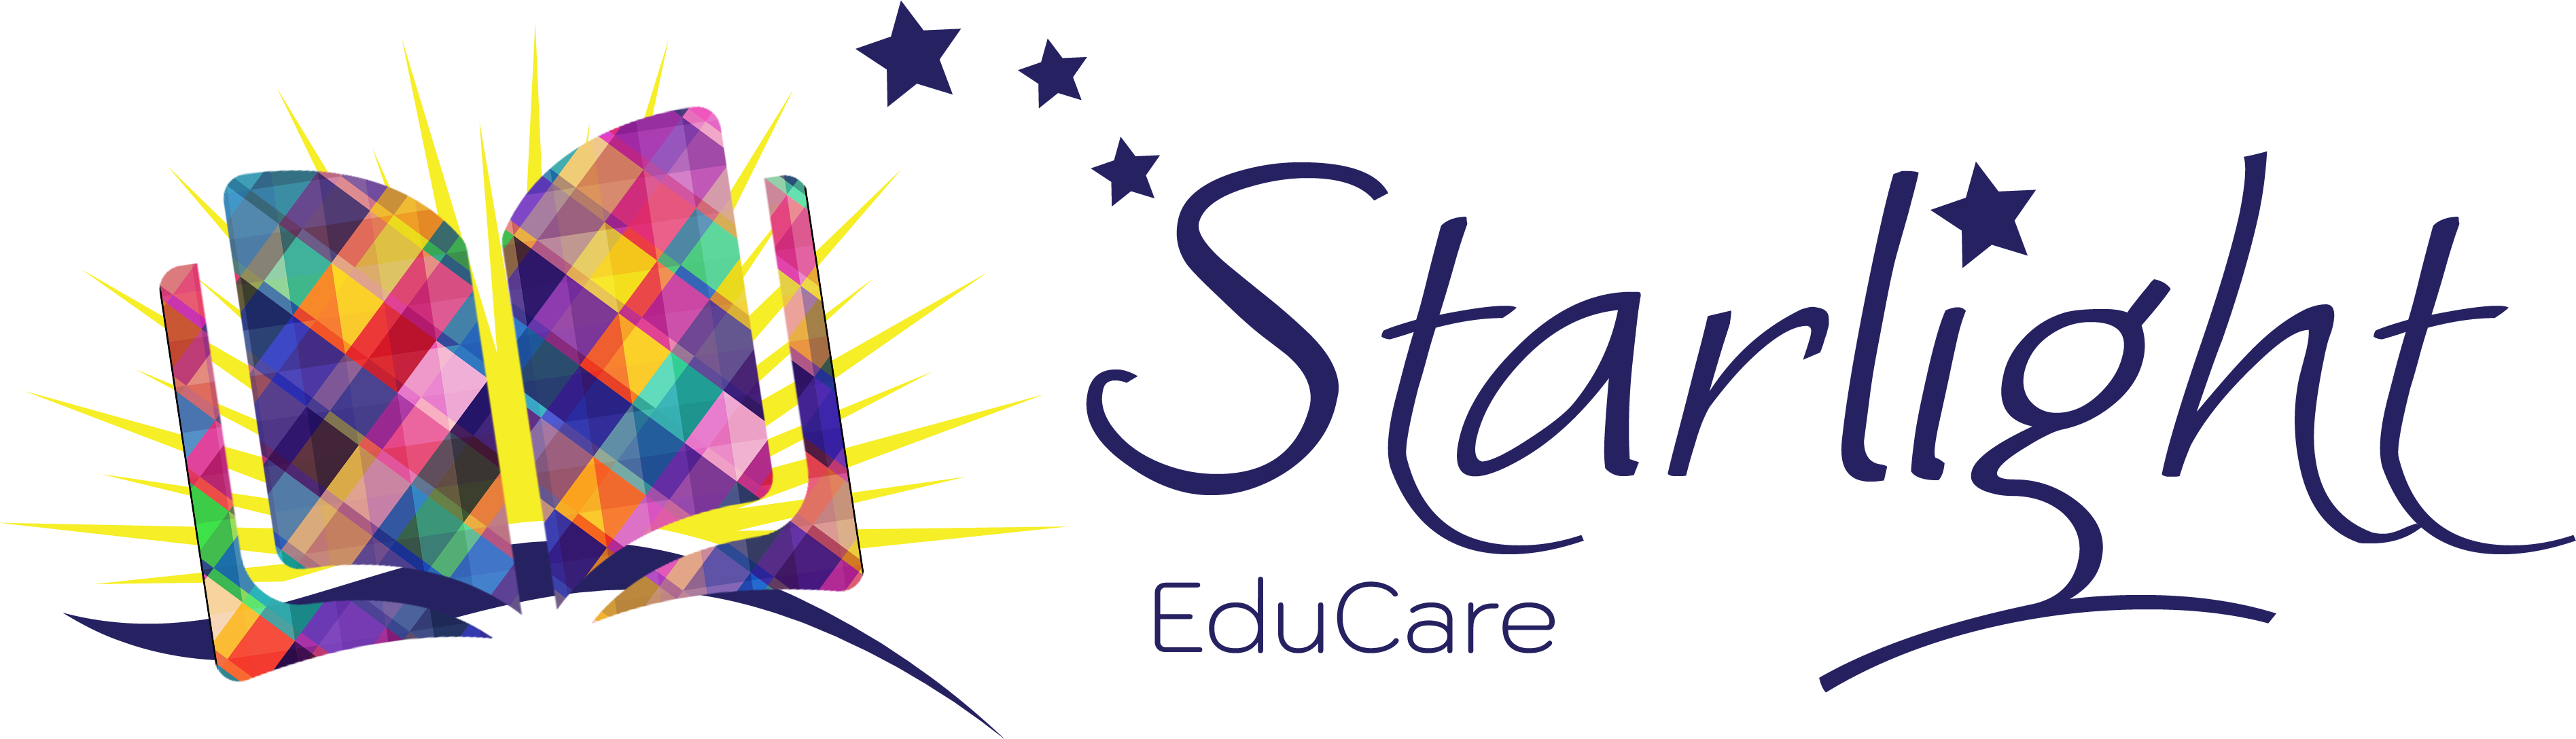 Starlight Safe House Educare